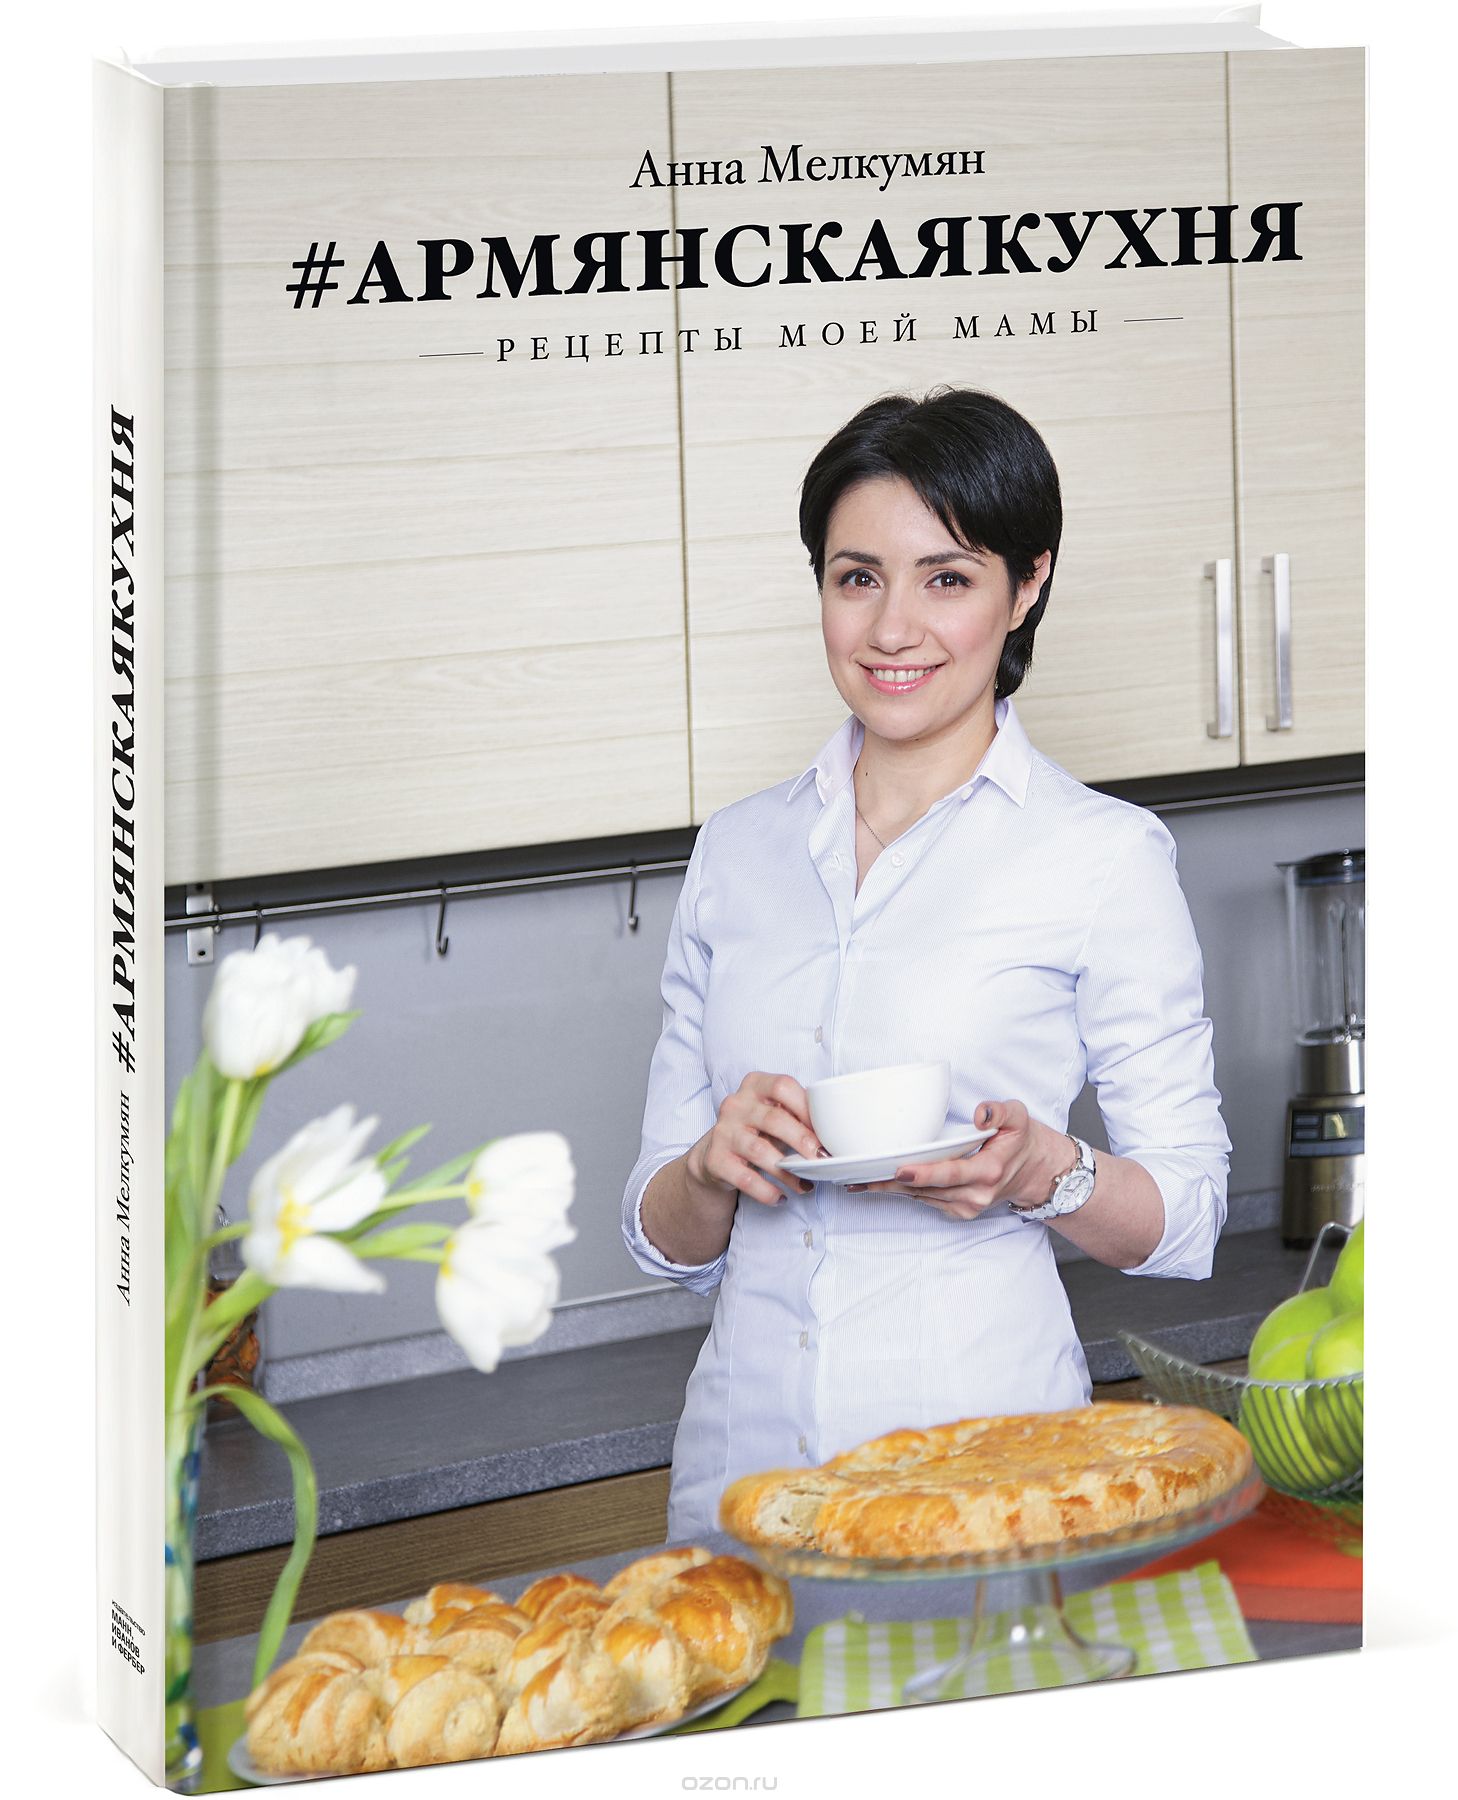 Скачать книгу "Армянская кухня. Рецепты моей мамы, Анна Мелкумян"